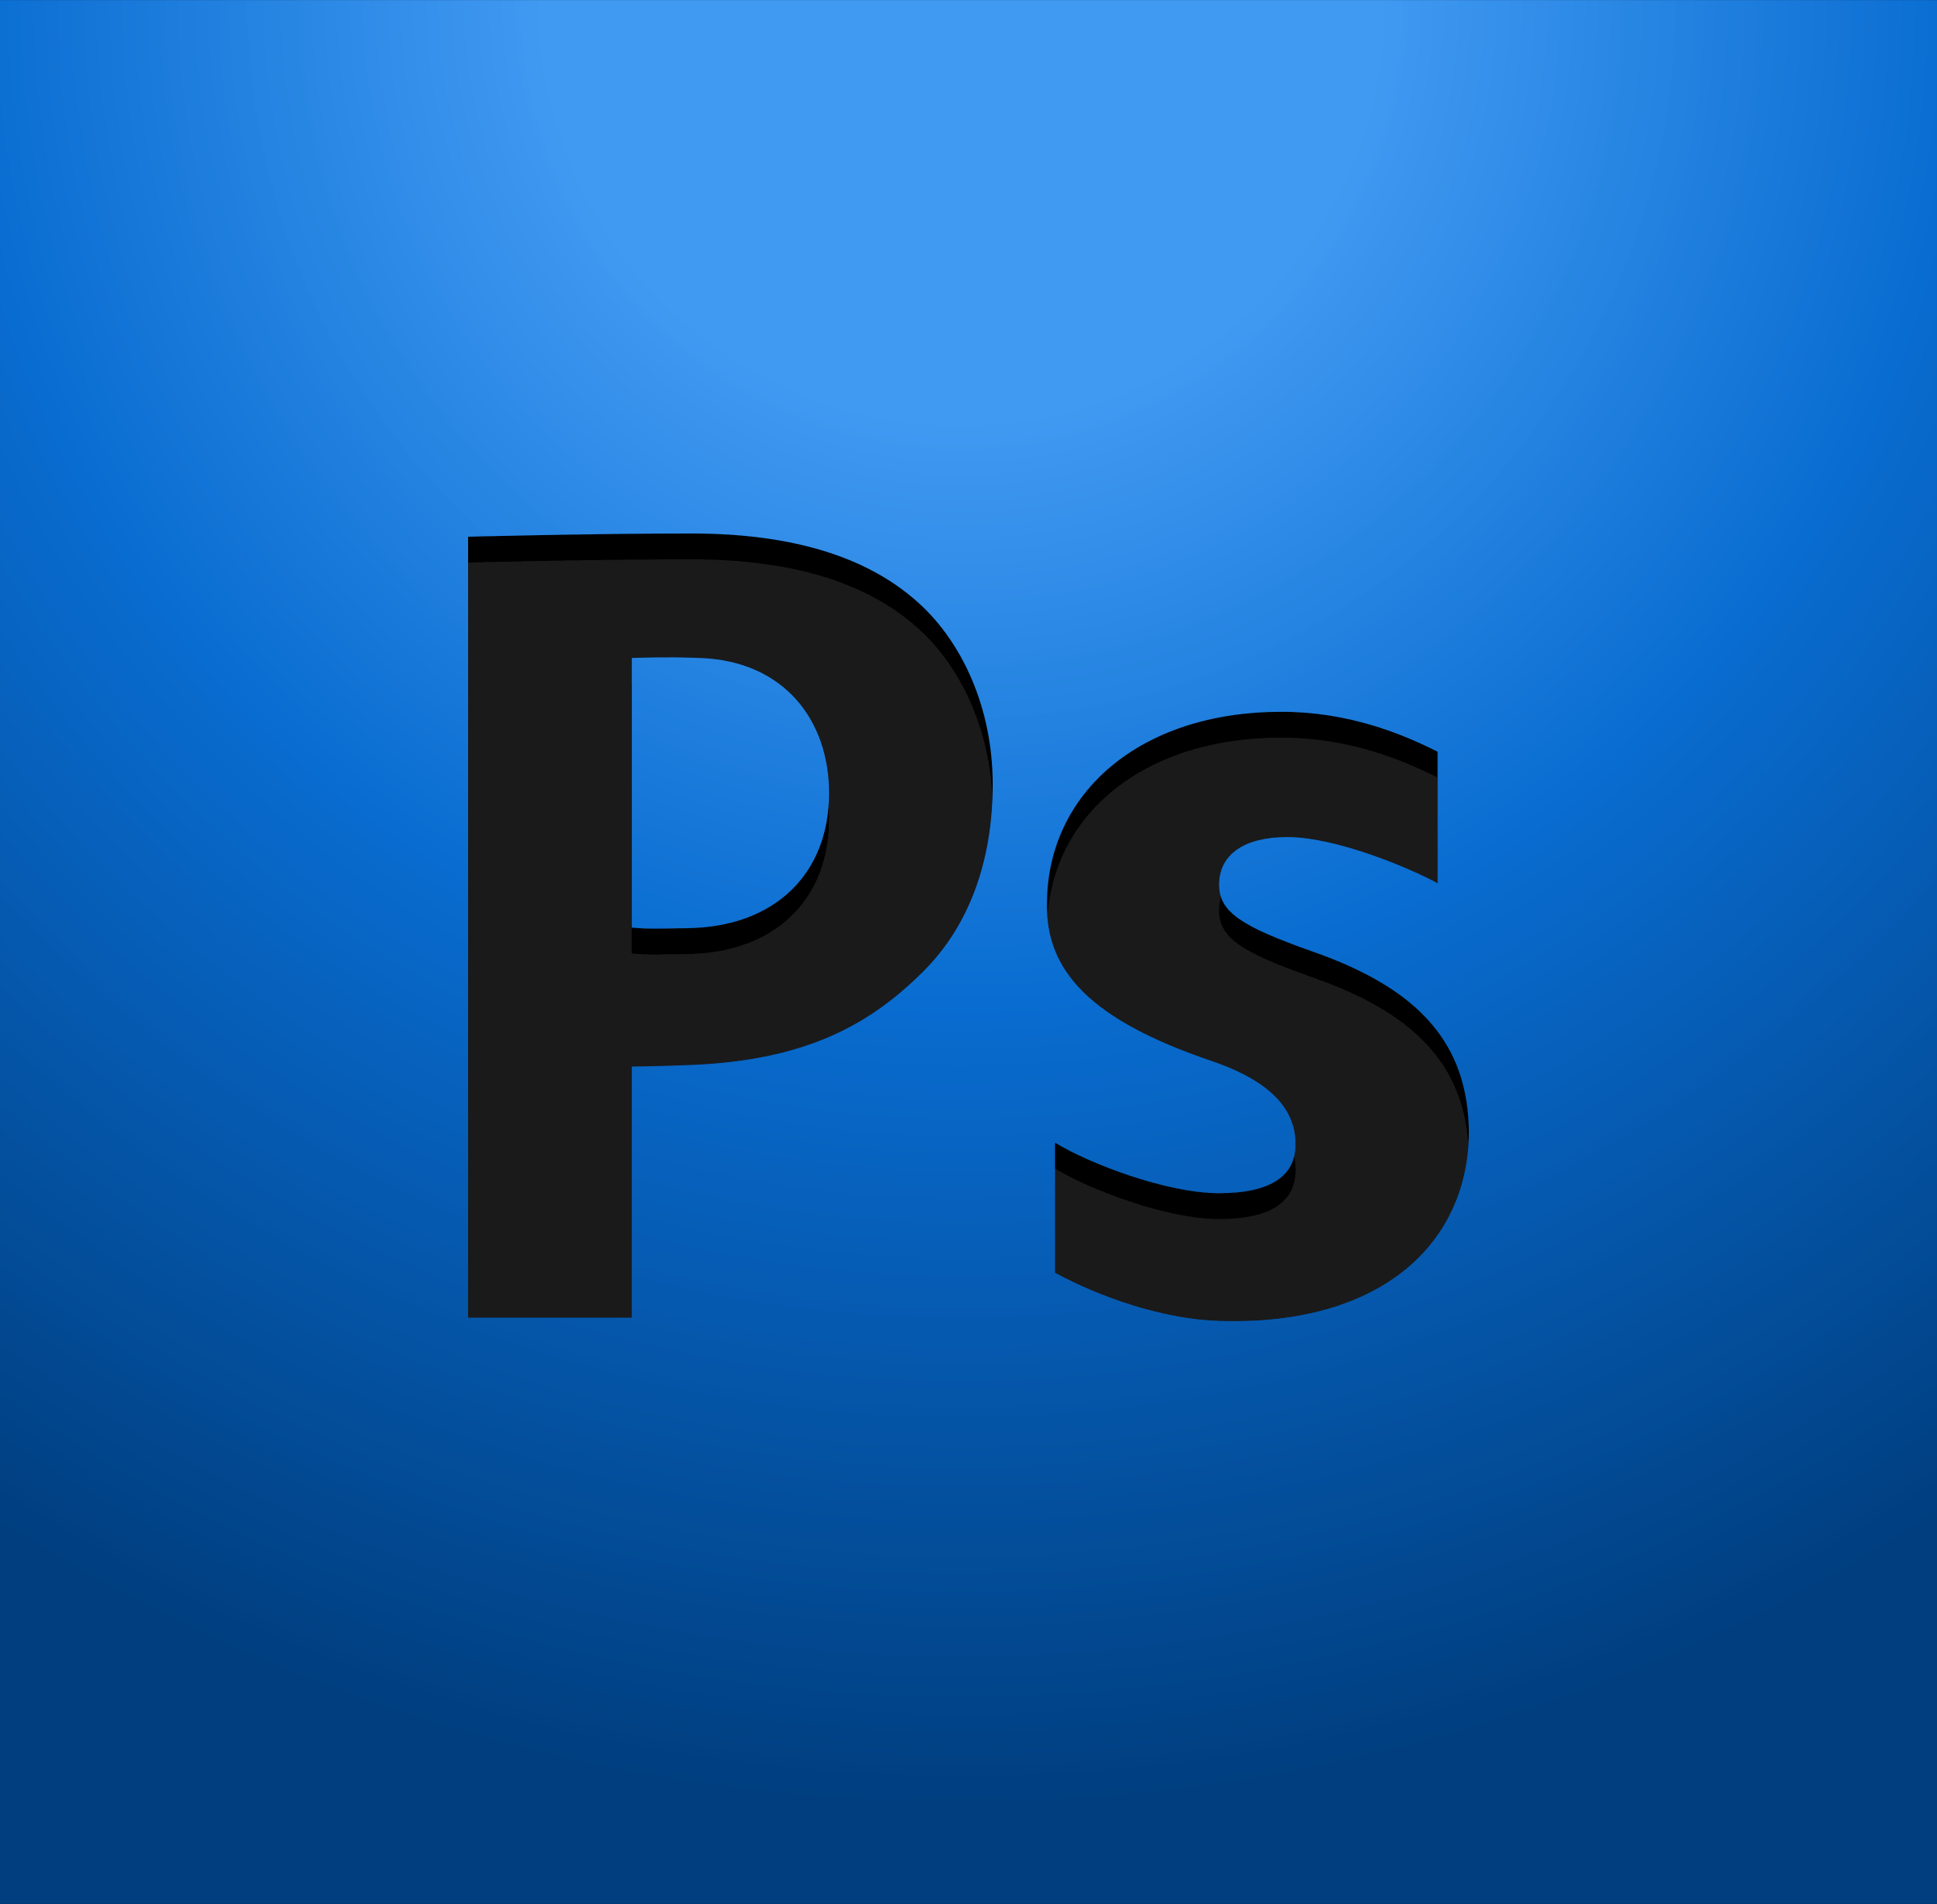 Adobe Photoshop Logo - Adobe Photoshop CS4 Logo PNG Transparent & SVG Vector - Freebie Supply